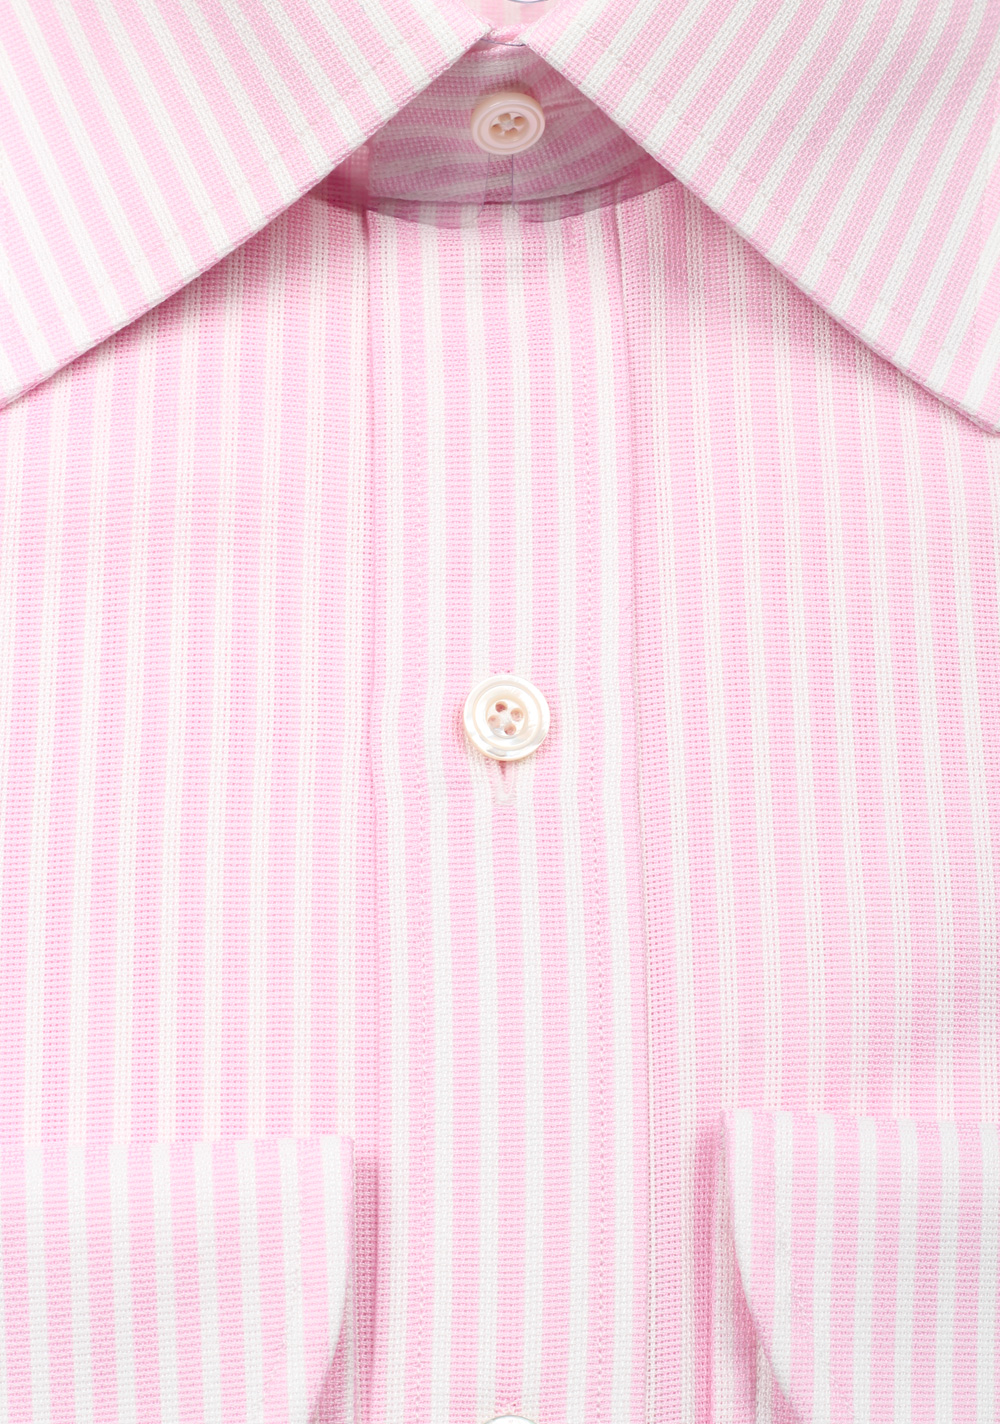 TOM FORD Striped Pink White Dress Shirt Size 44 / 17,5 U.S. | Costume Limité